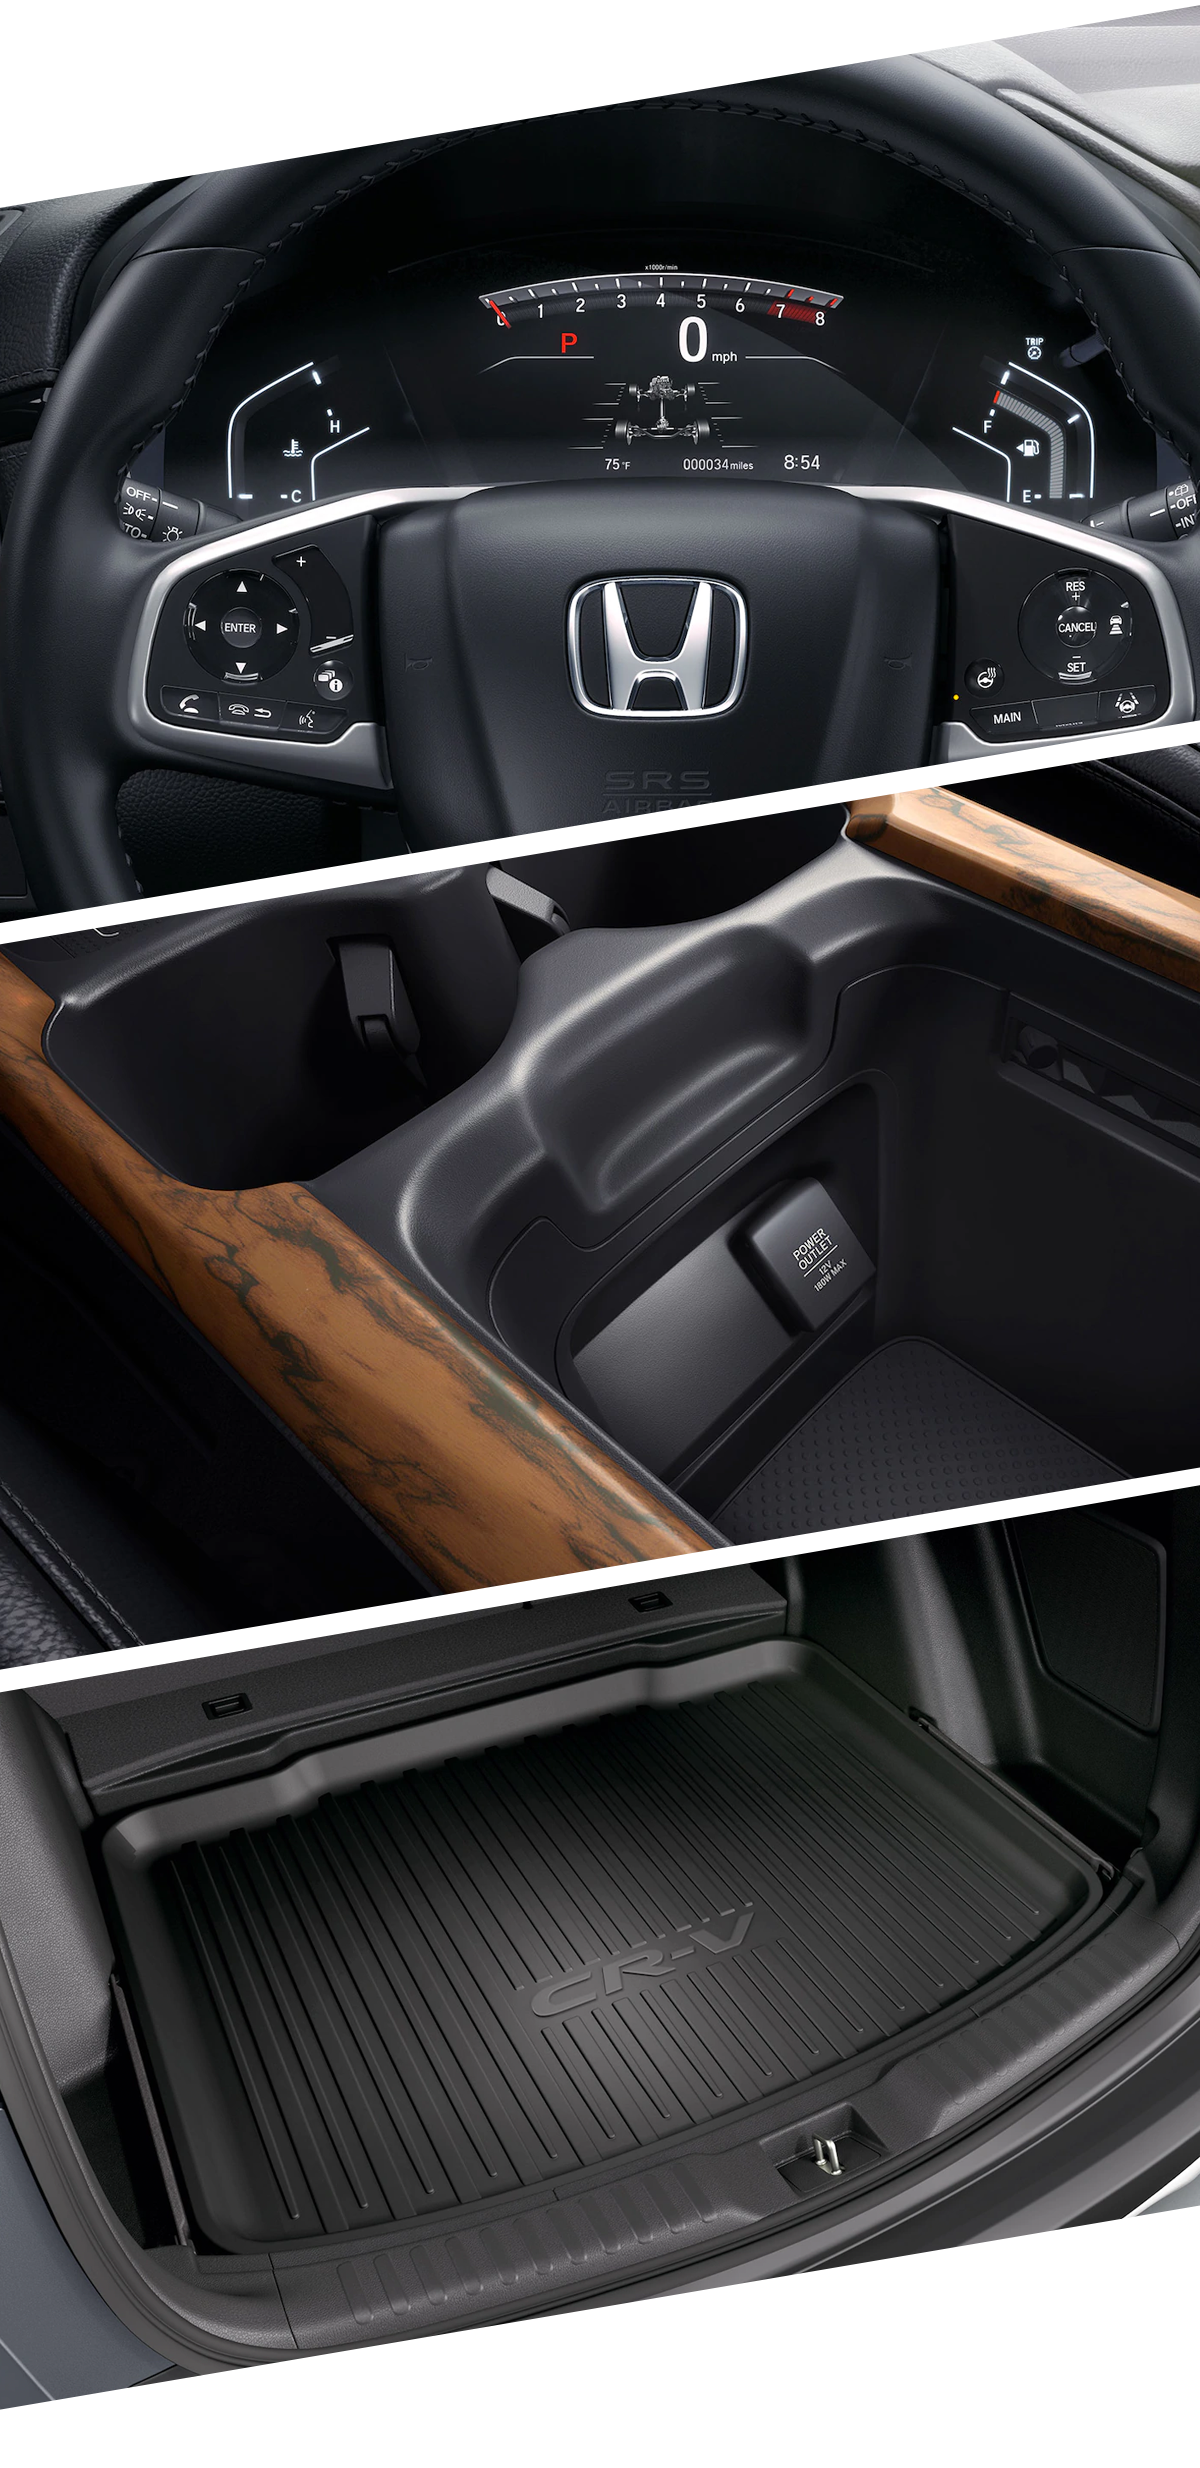 Honda CR-V Interior Images